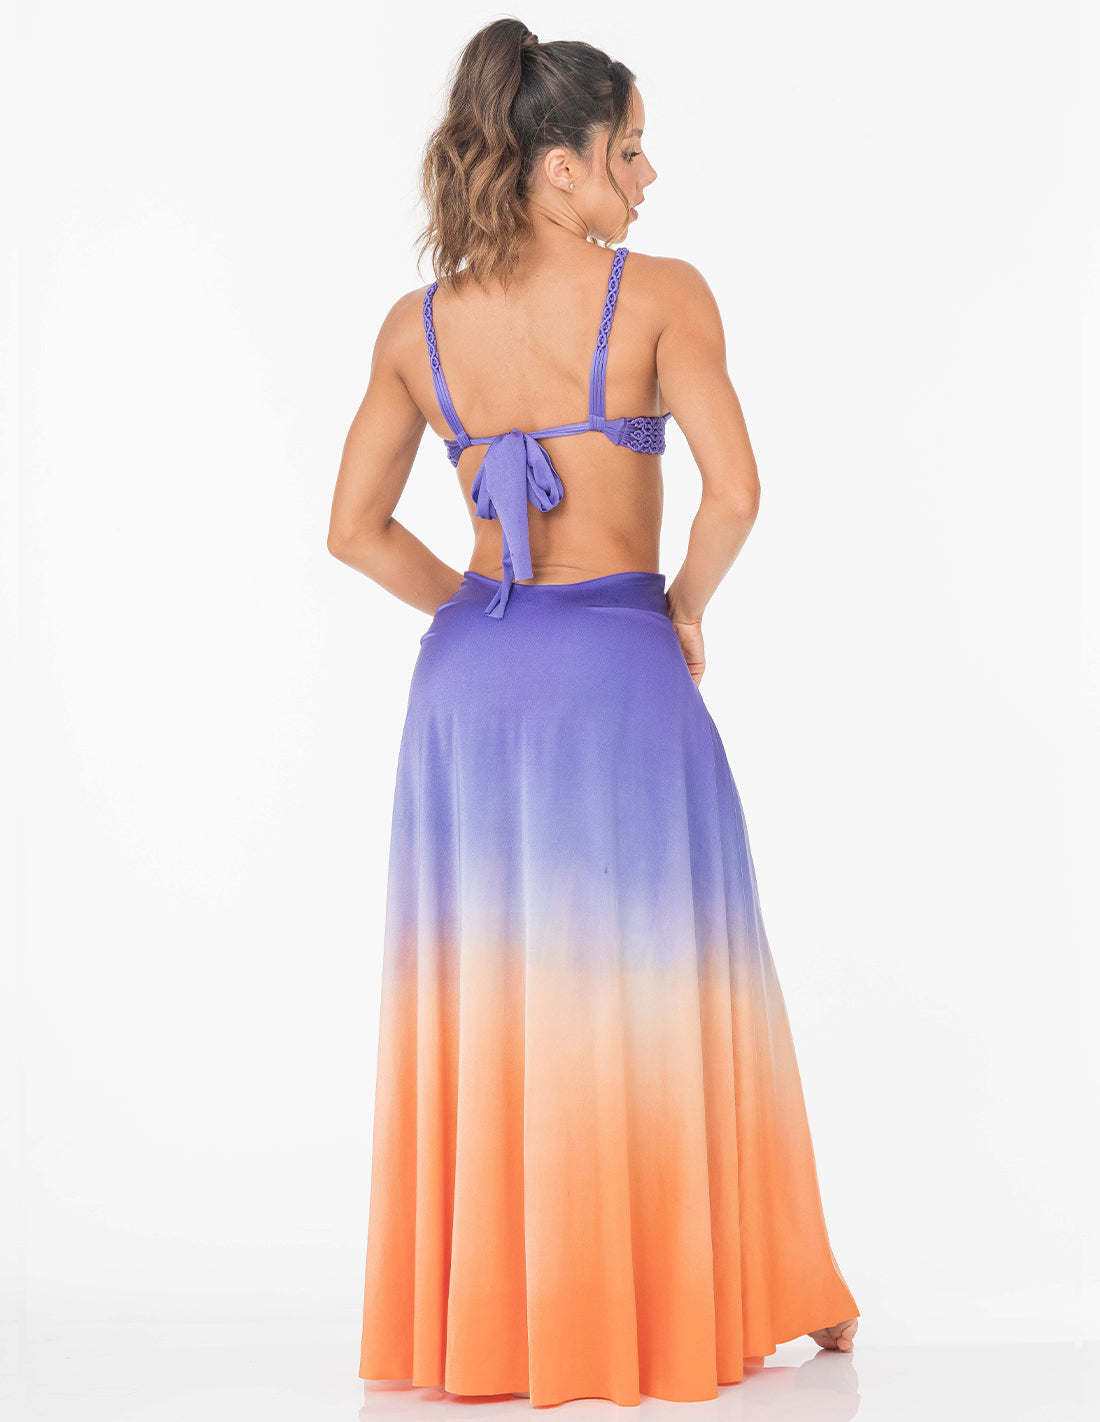 Isla Skirt Bright Lilac + Orange. Hand-Dyed Skirt In Bright Lilac + Orange. Entreaguas